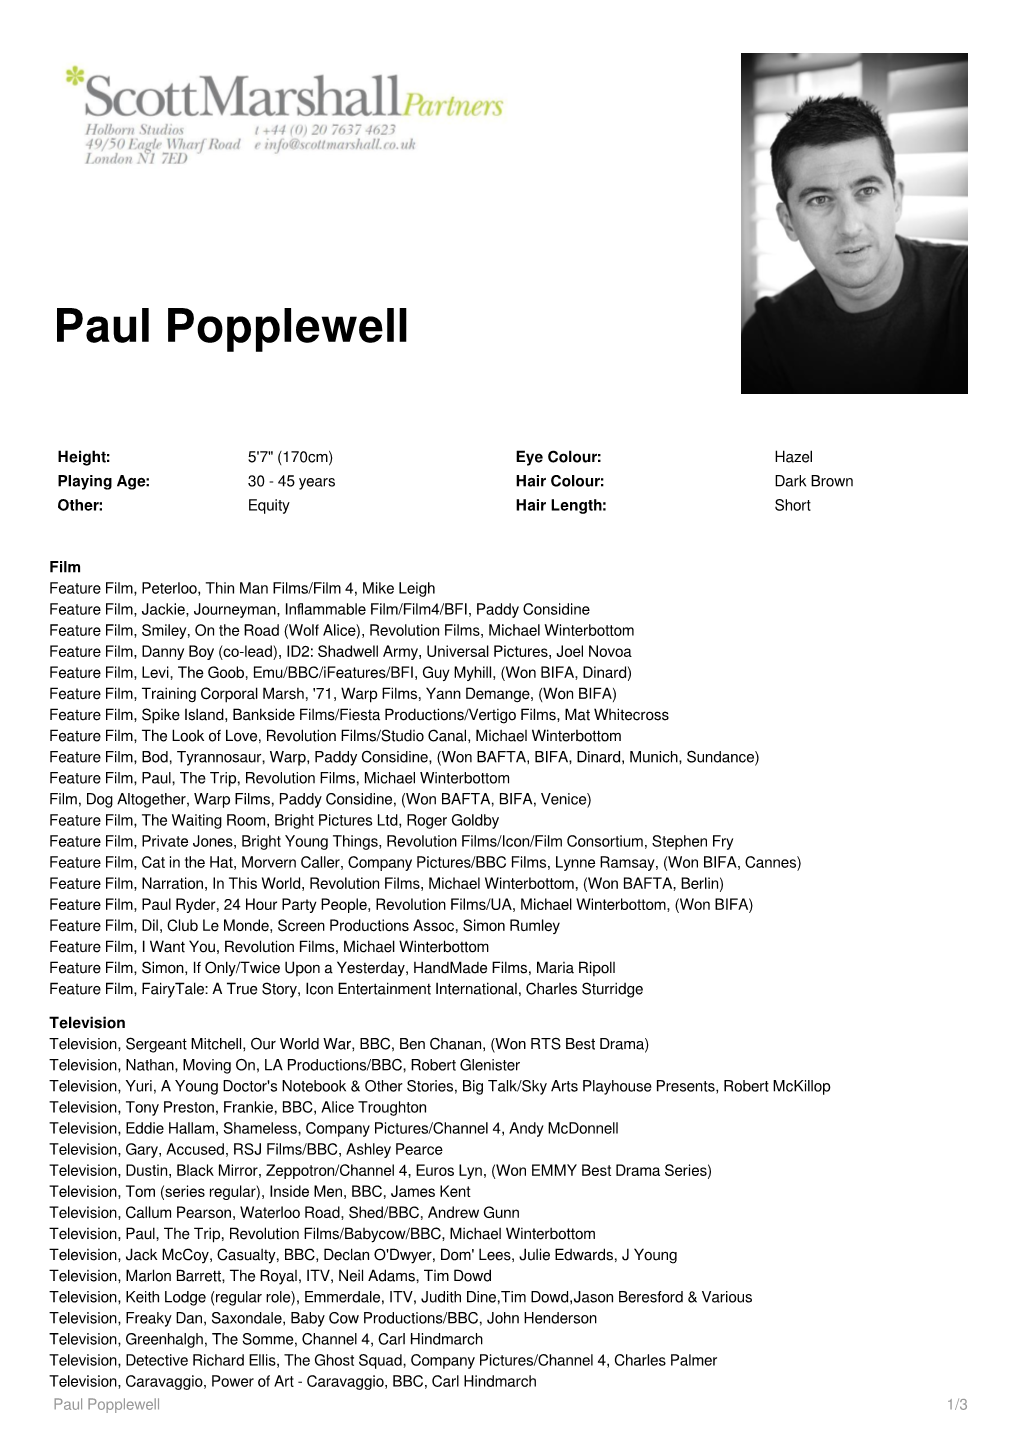 Paul Popplewell